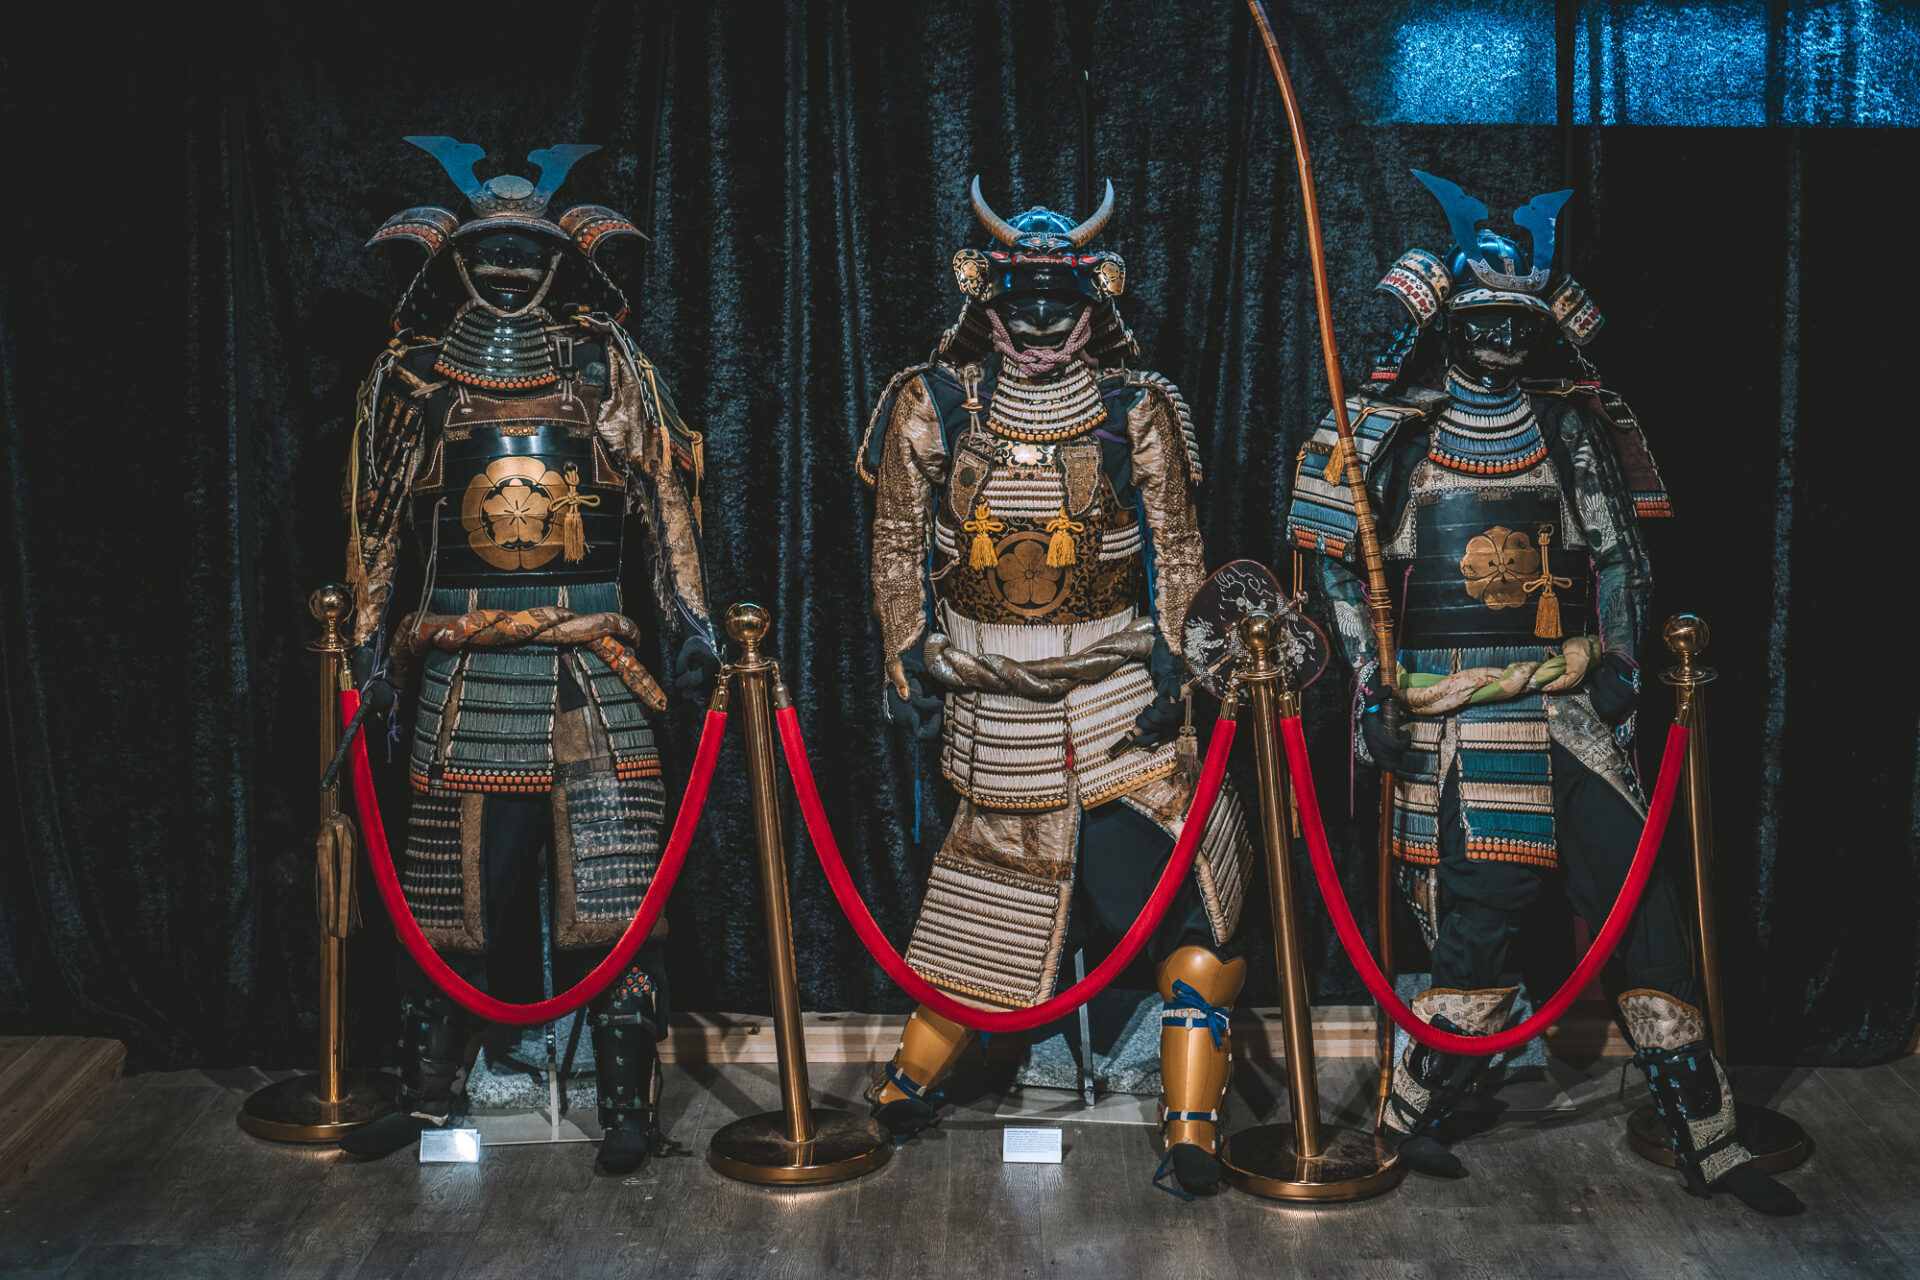 Uniform replicas at the Samurai Display